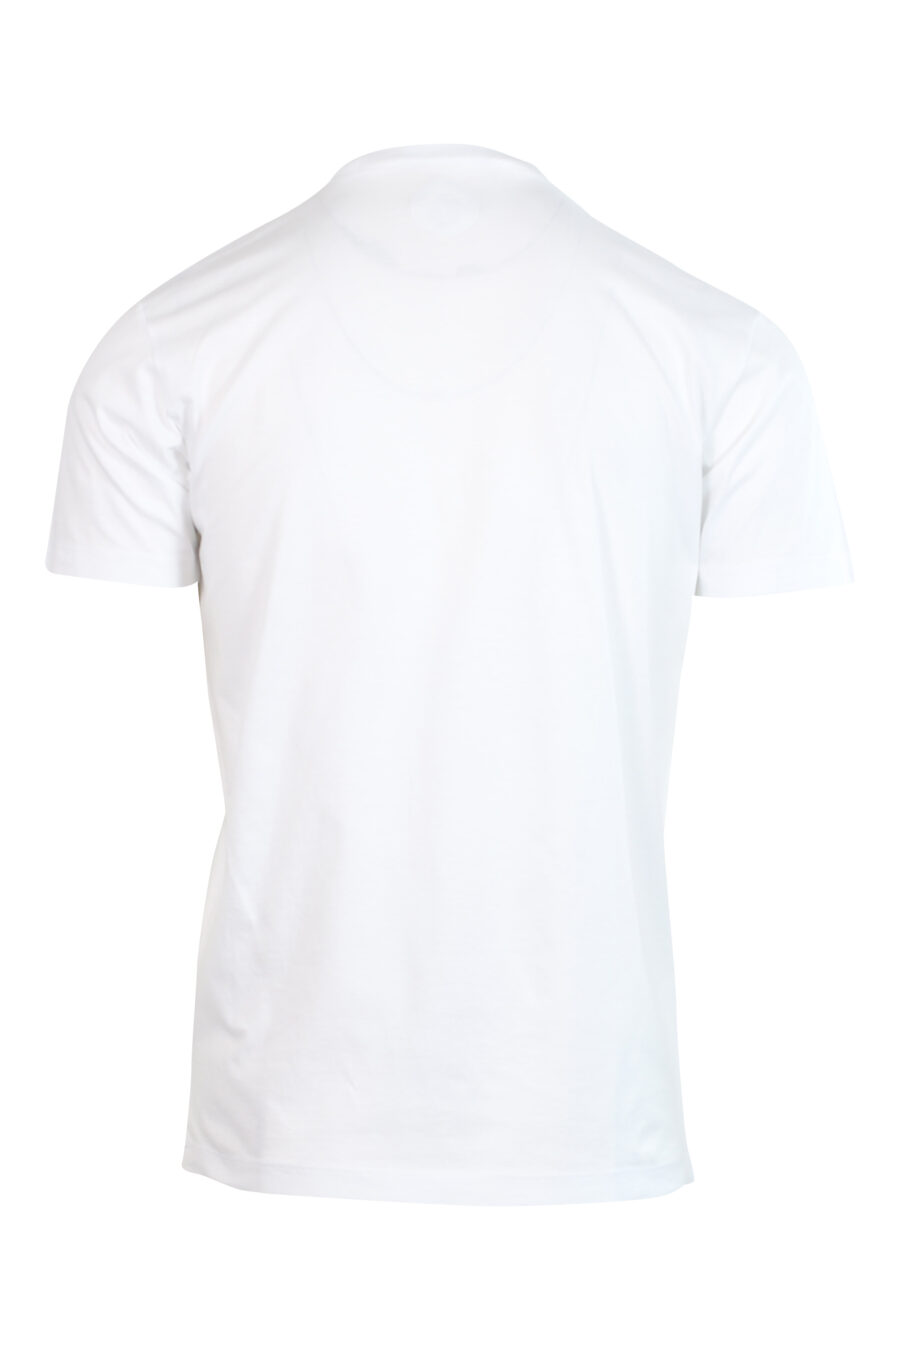 T-shirt blanc avec logo rouge - 8052134945995 2